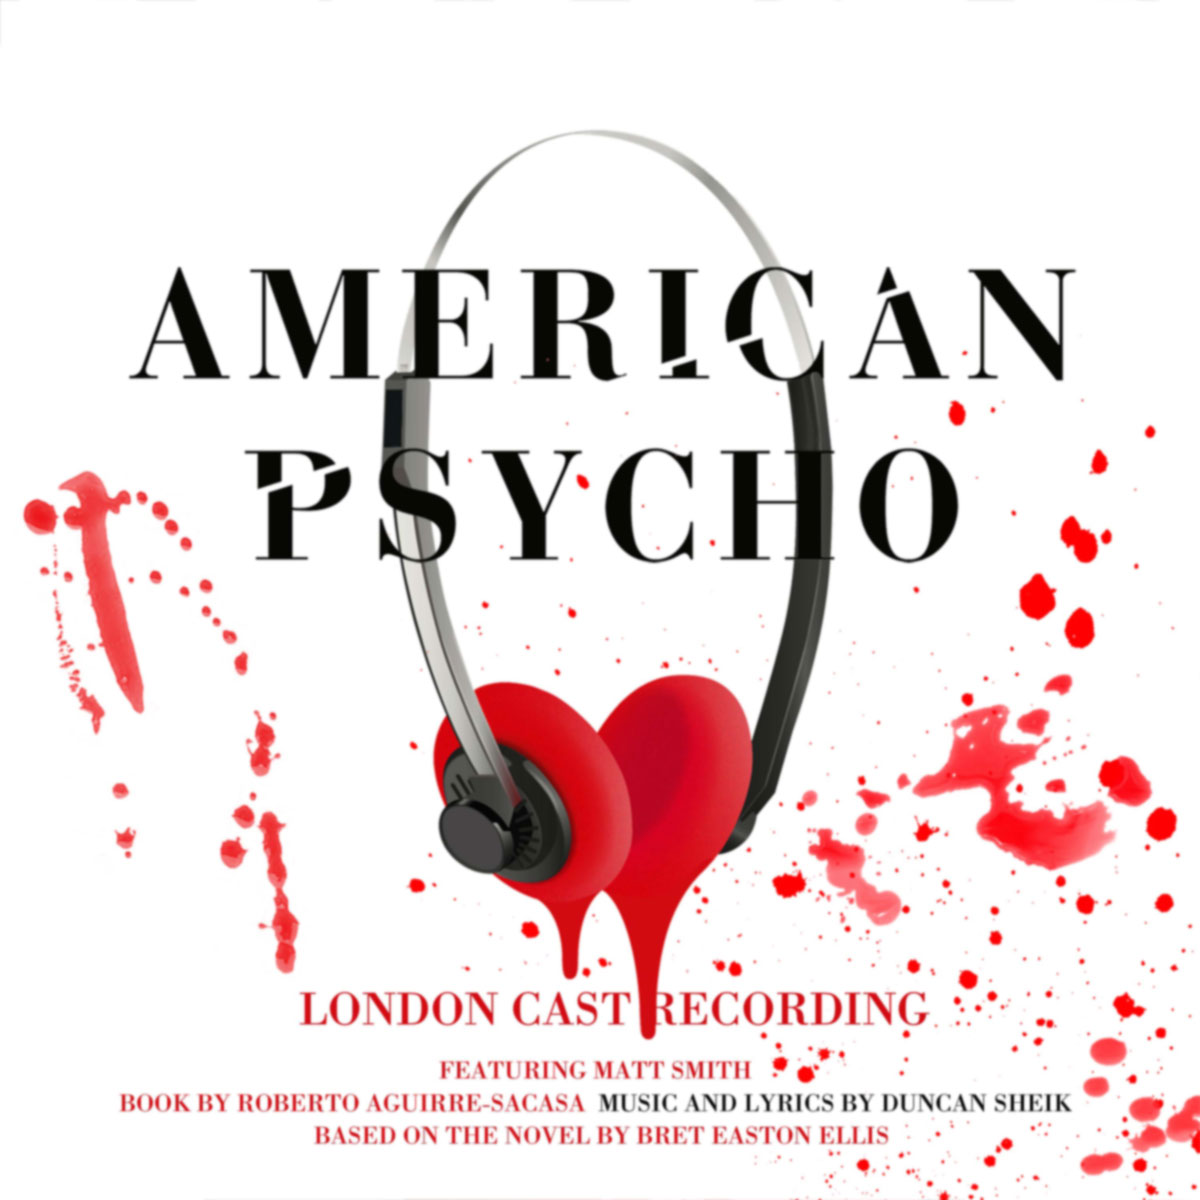 American Psycho - London Cast Recording